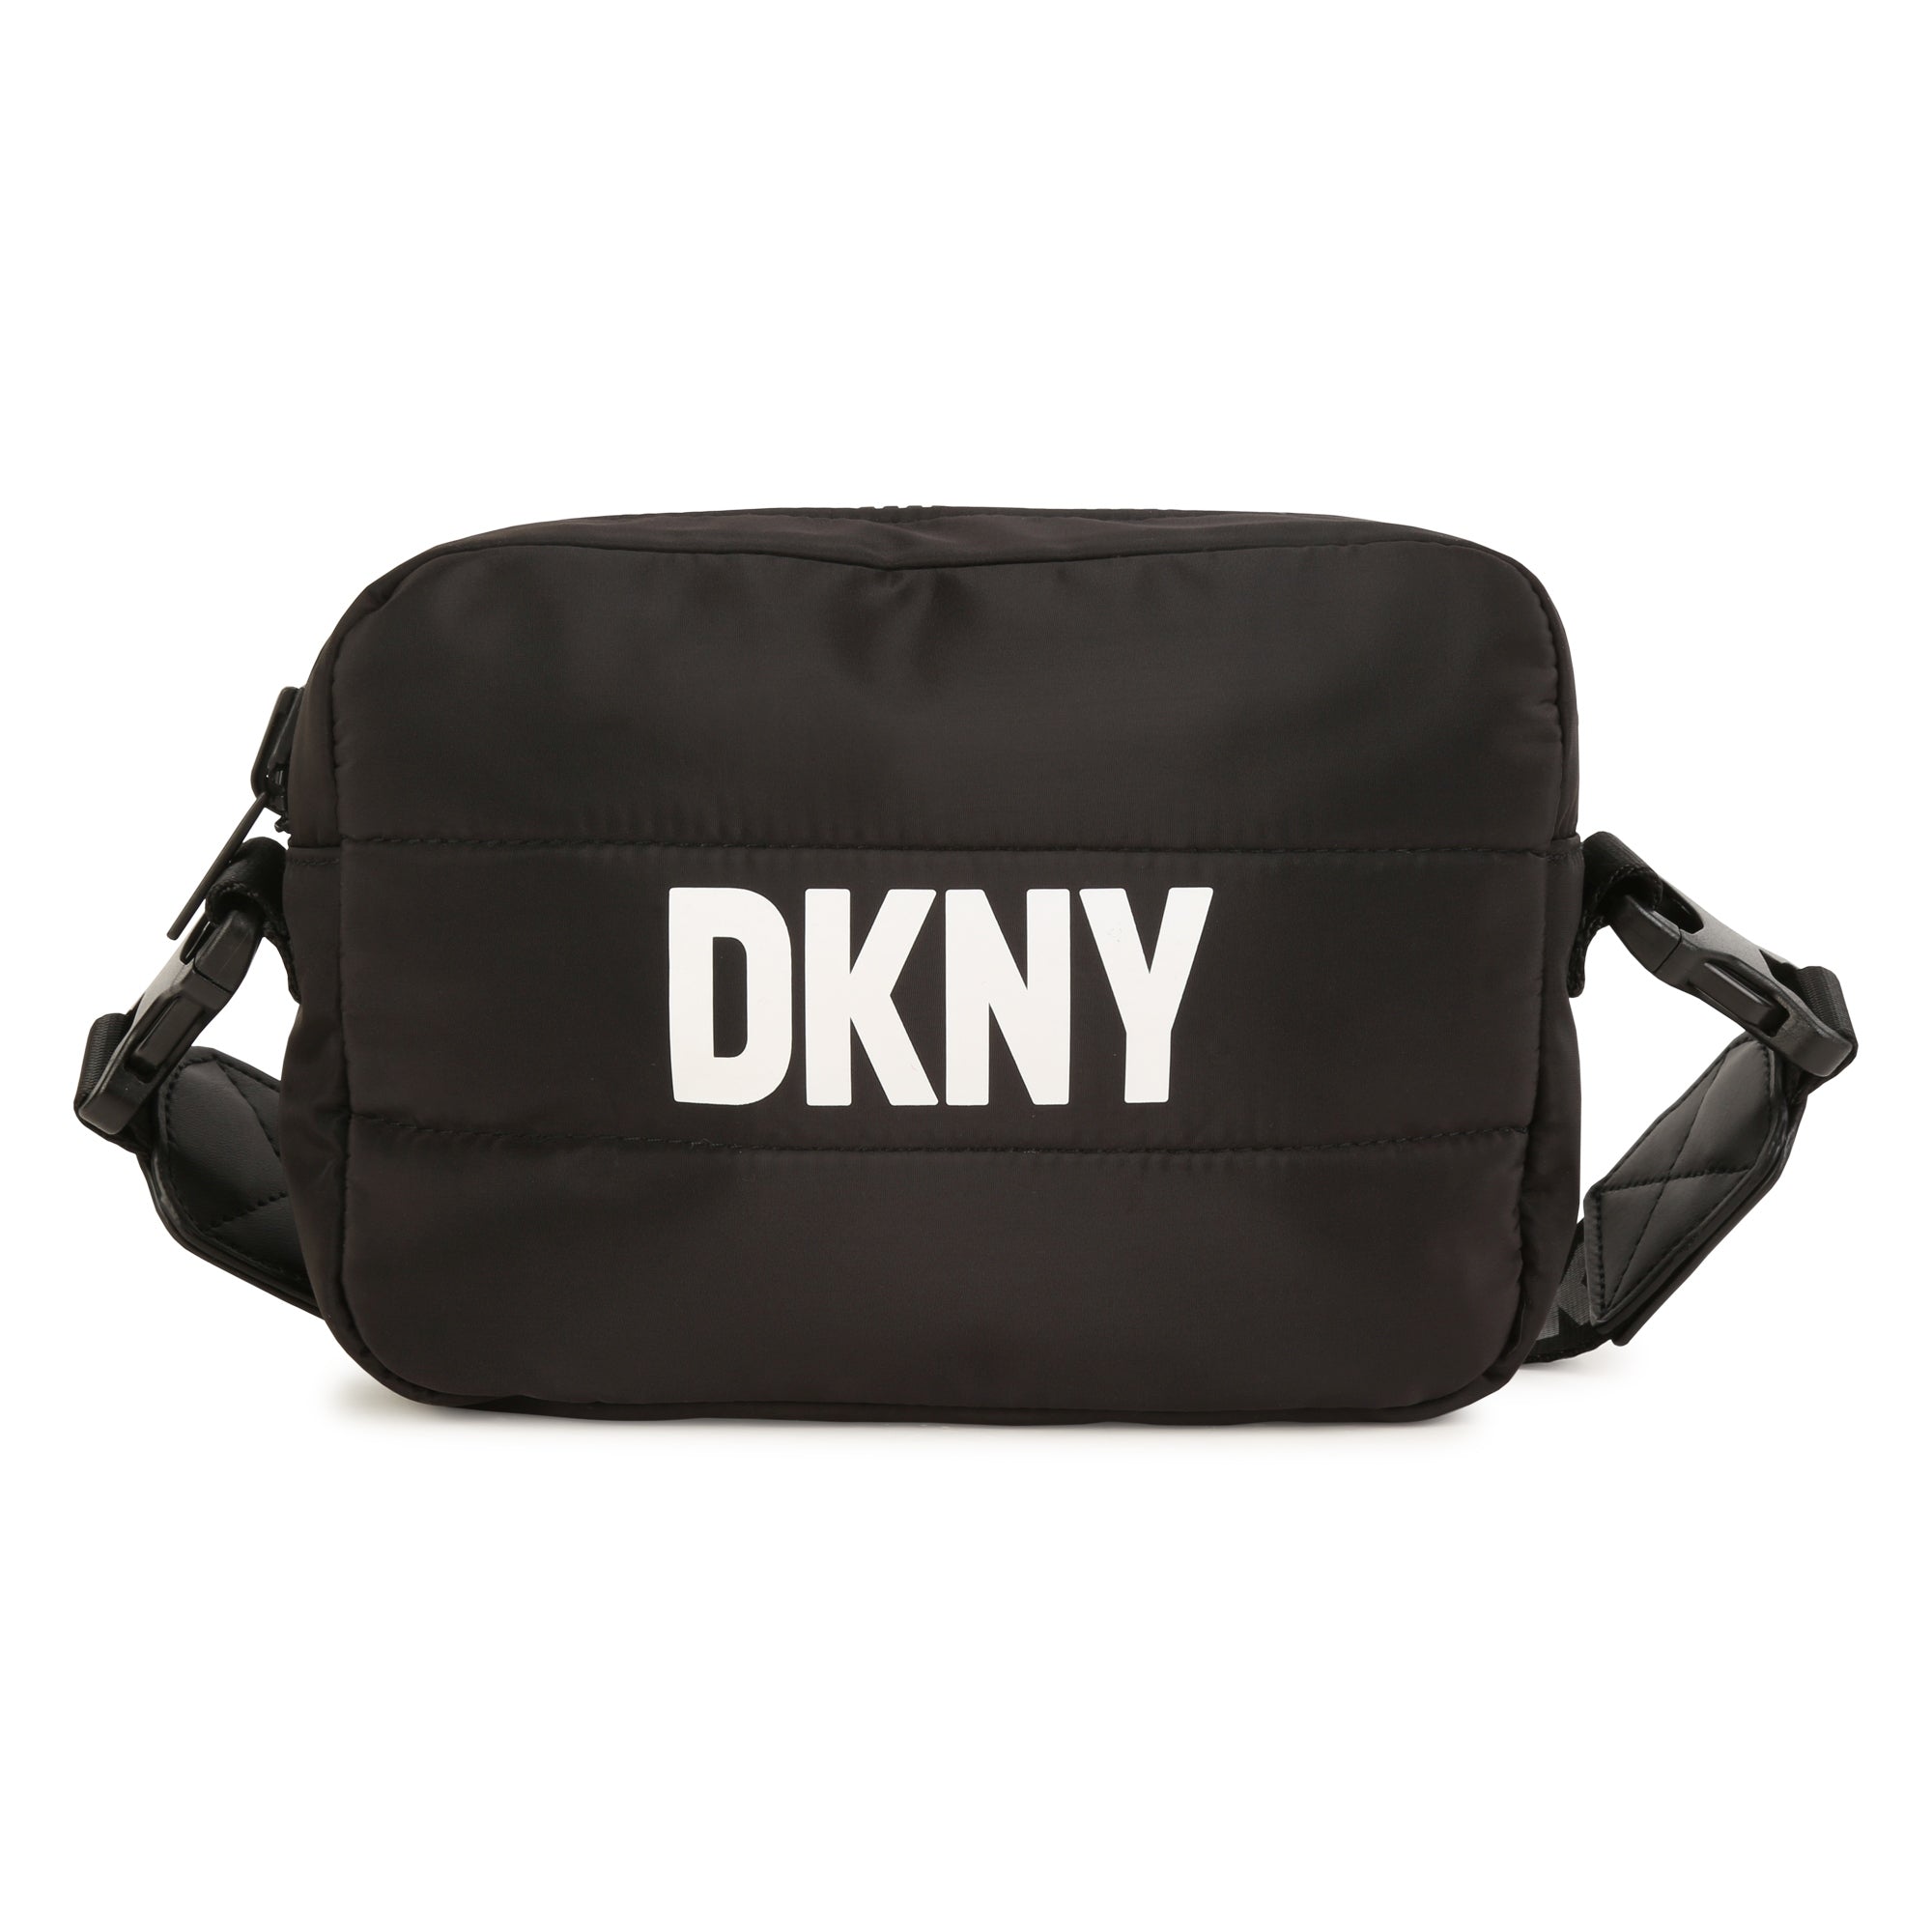 DKNY Kids Girls Cross Body Bag - Black